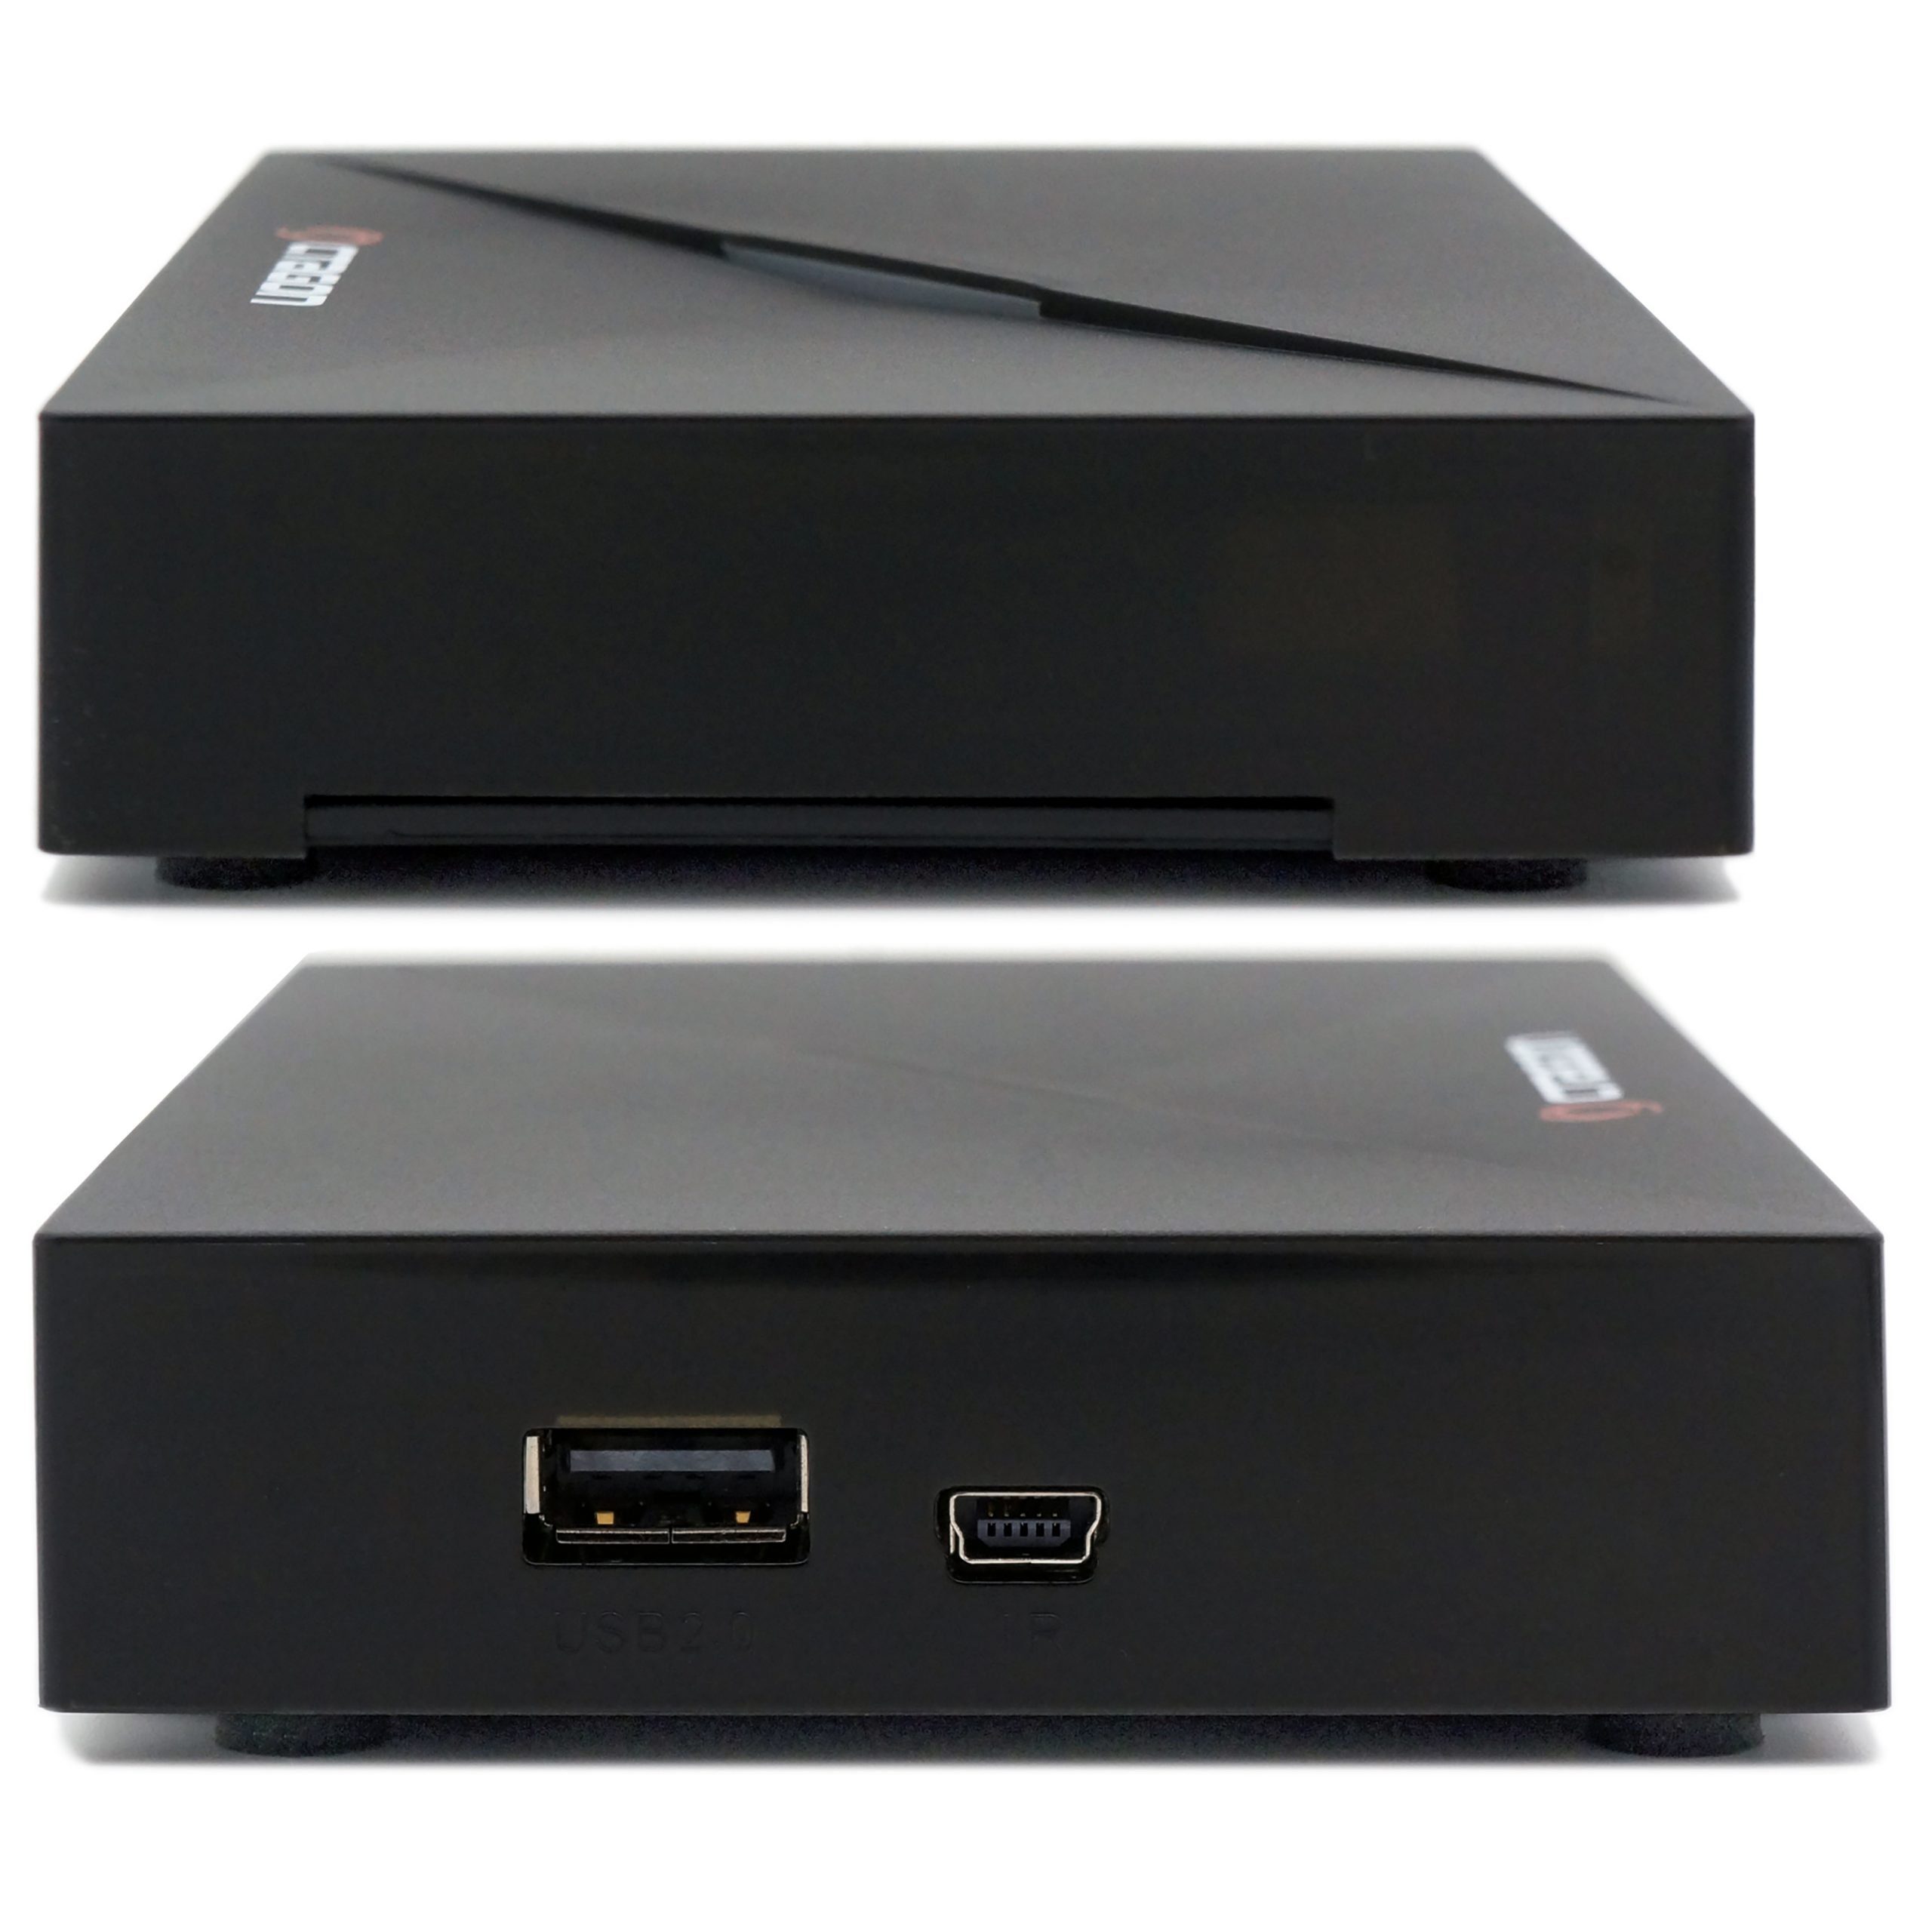 5G Linux IP UHD Smart SX888 Streaming-Box Receiver TV OCTAGON V2 E2 WL 4K Wi-Fi